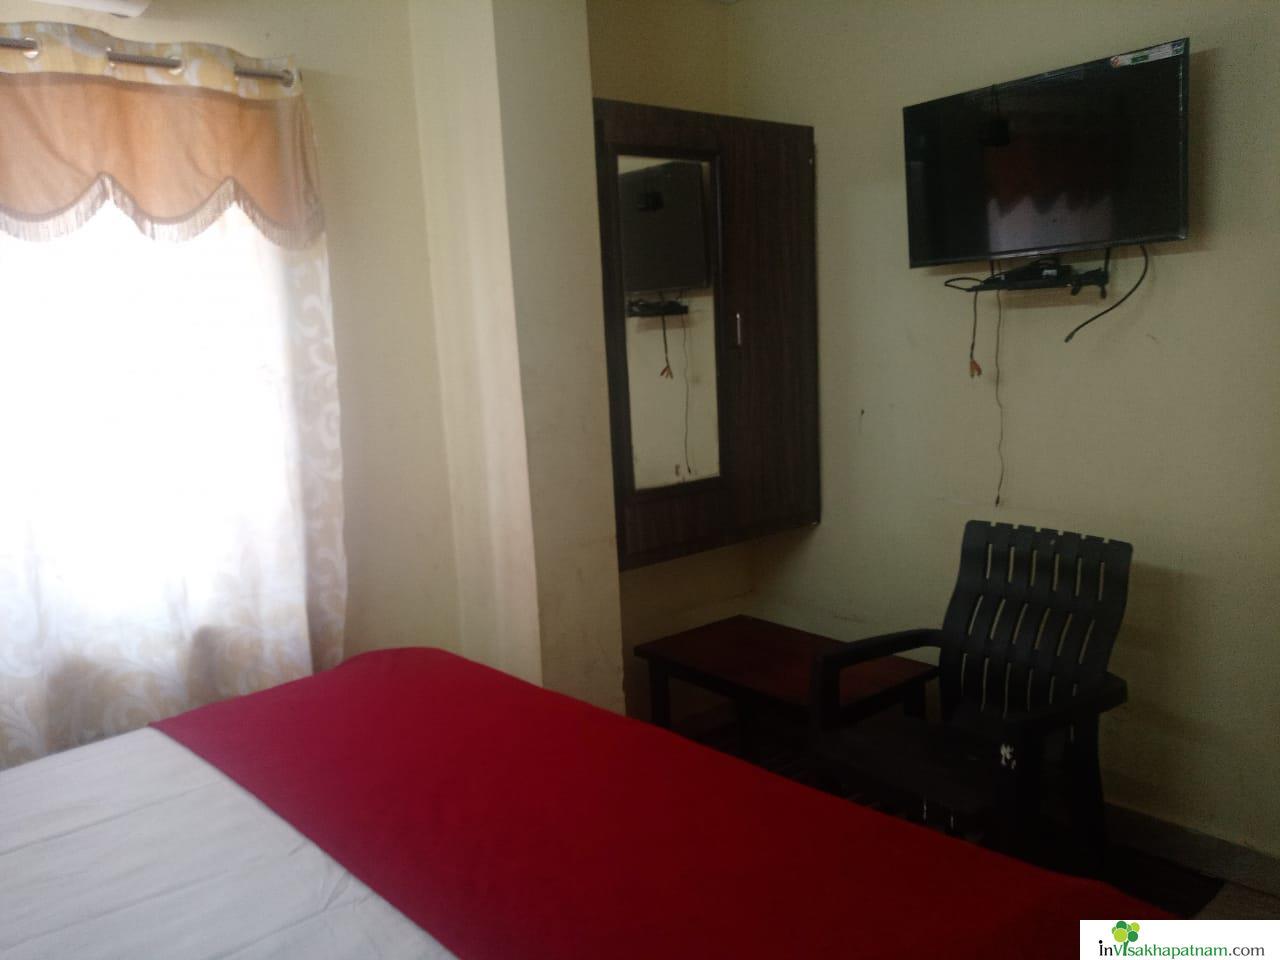 Hotel Sai Jutika Grand bowdararoad hotel guest house lodge vizag